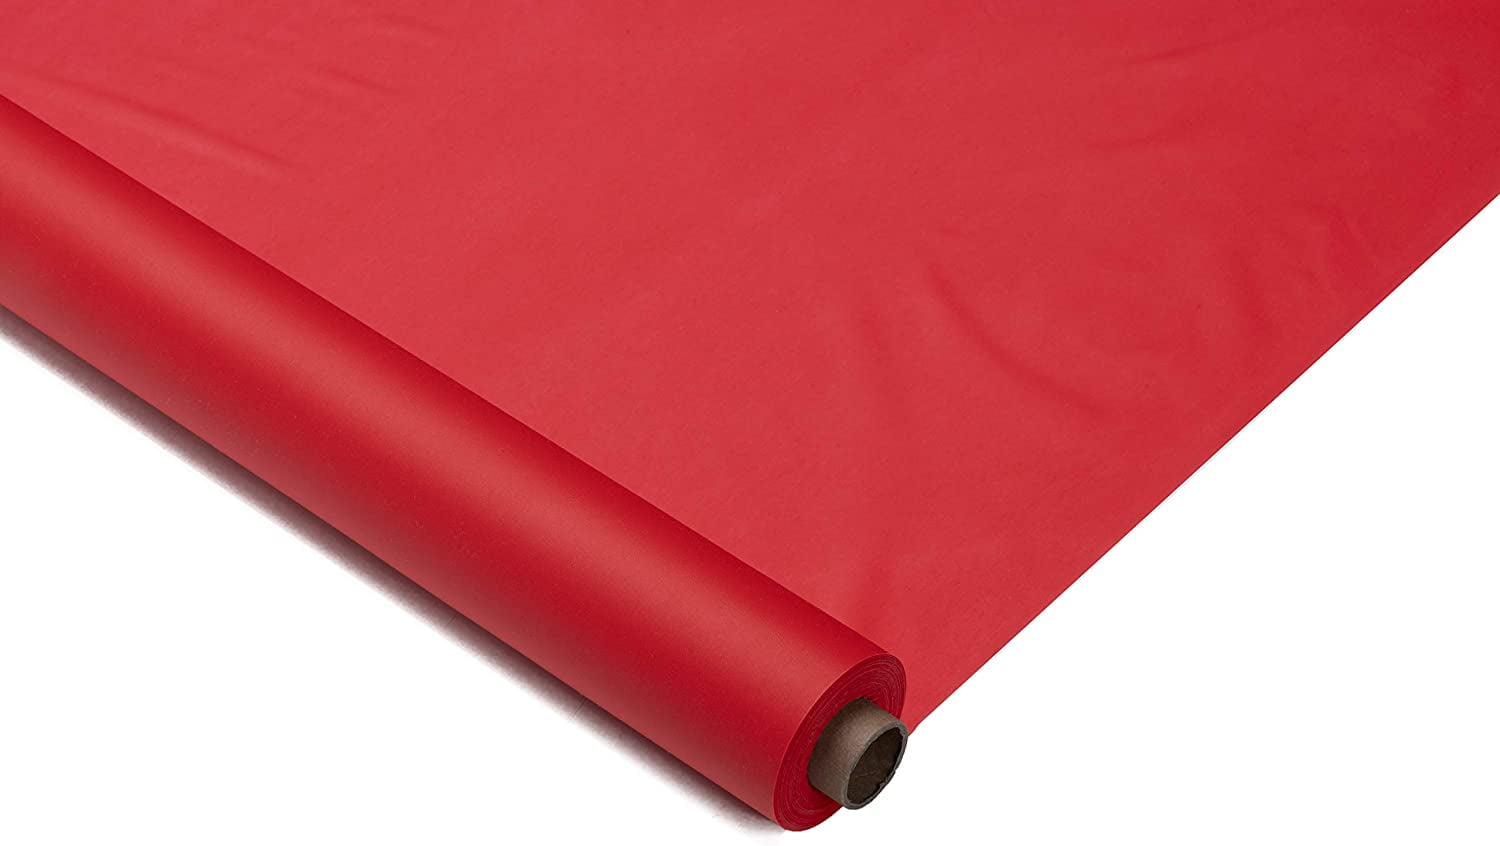 25m Red Banquet Roll